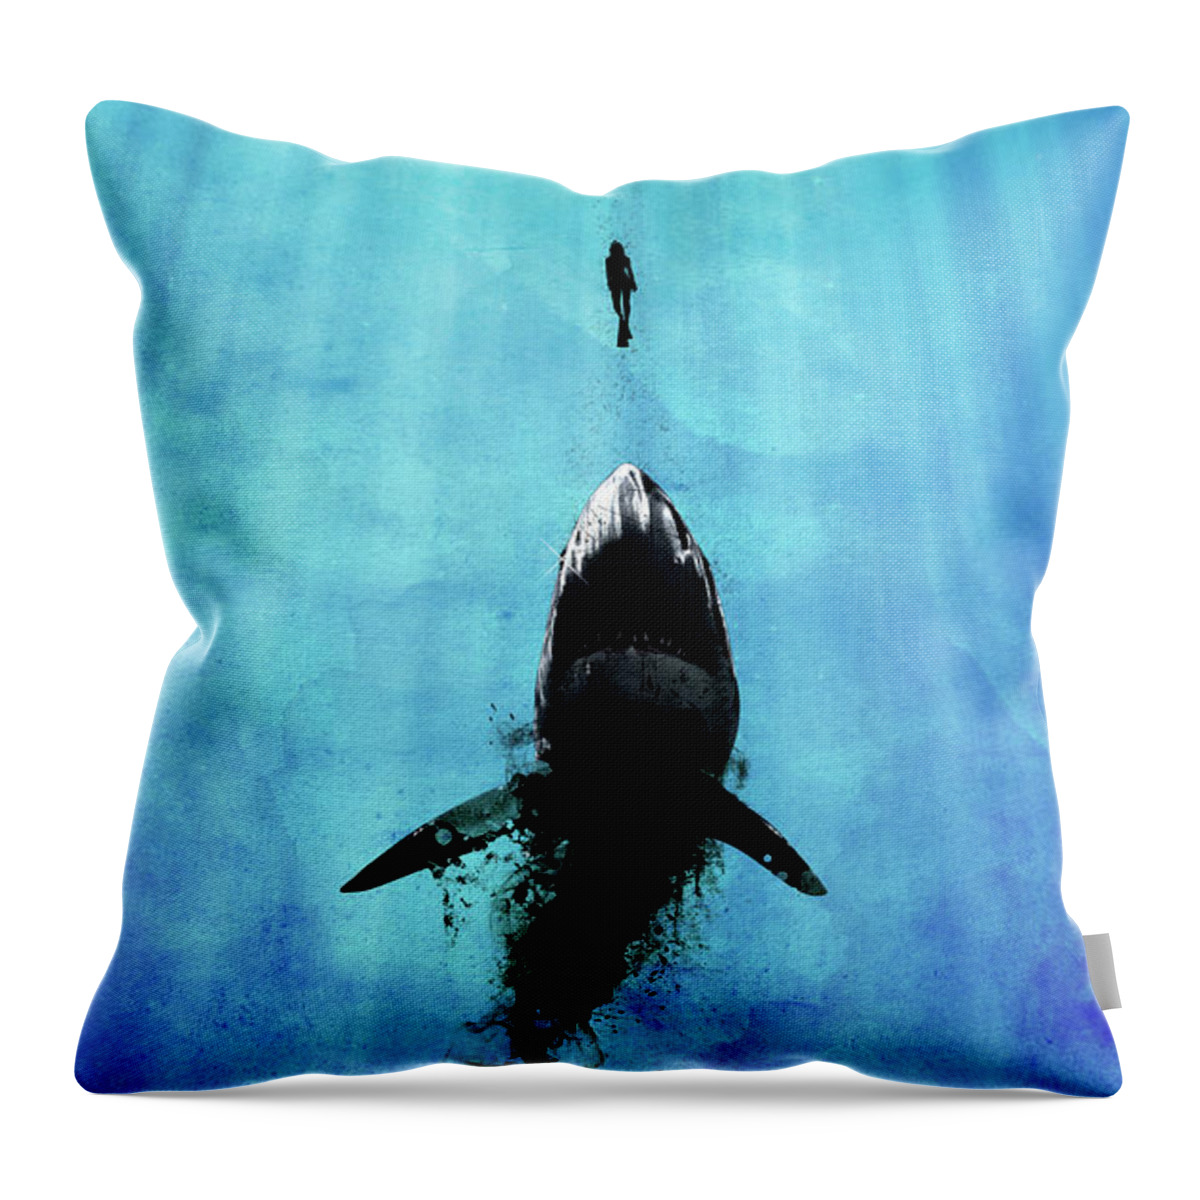 Deep Blue Sea Throw Pillow featuring the digital art Deep Blue Sea by Super Lovely